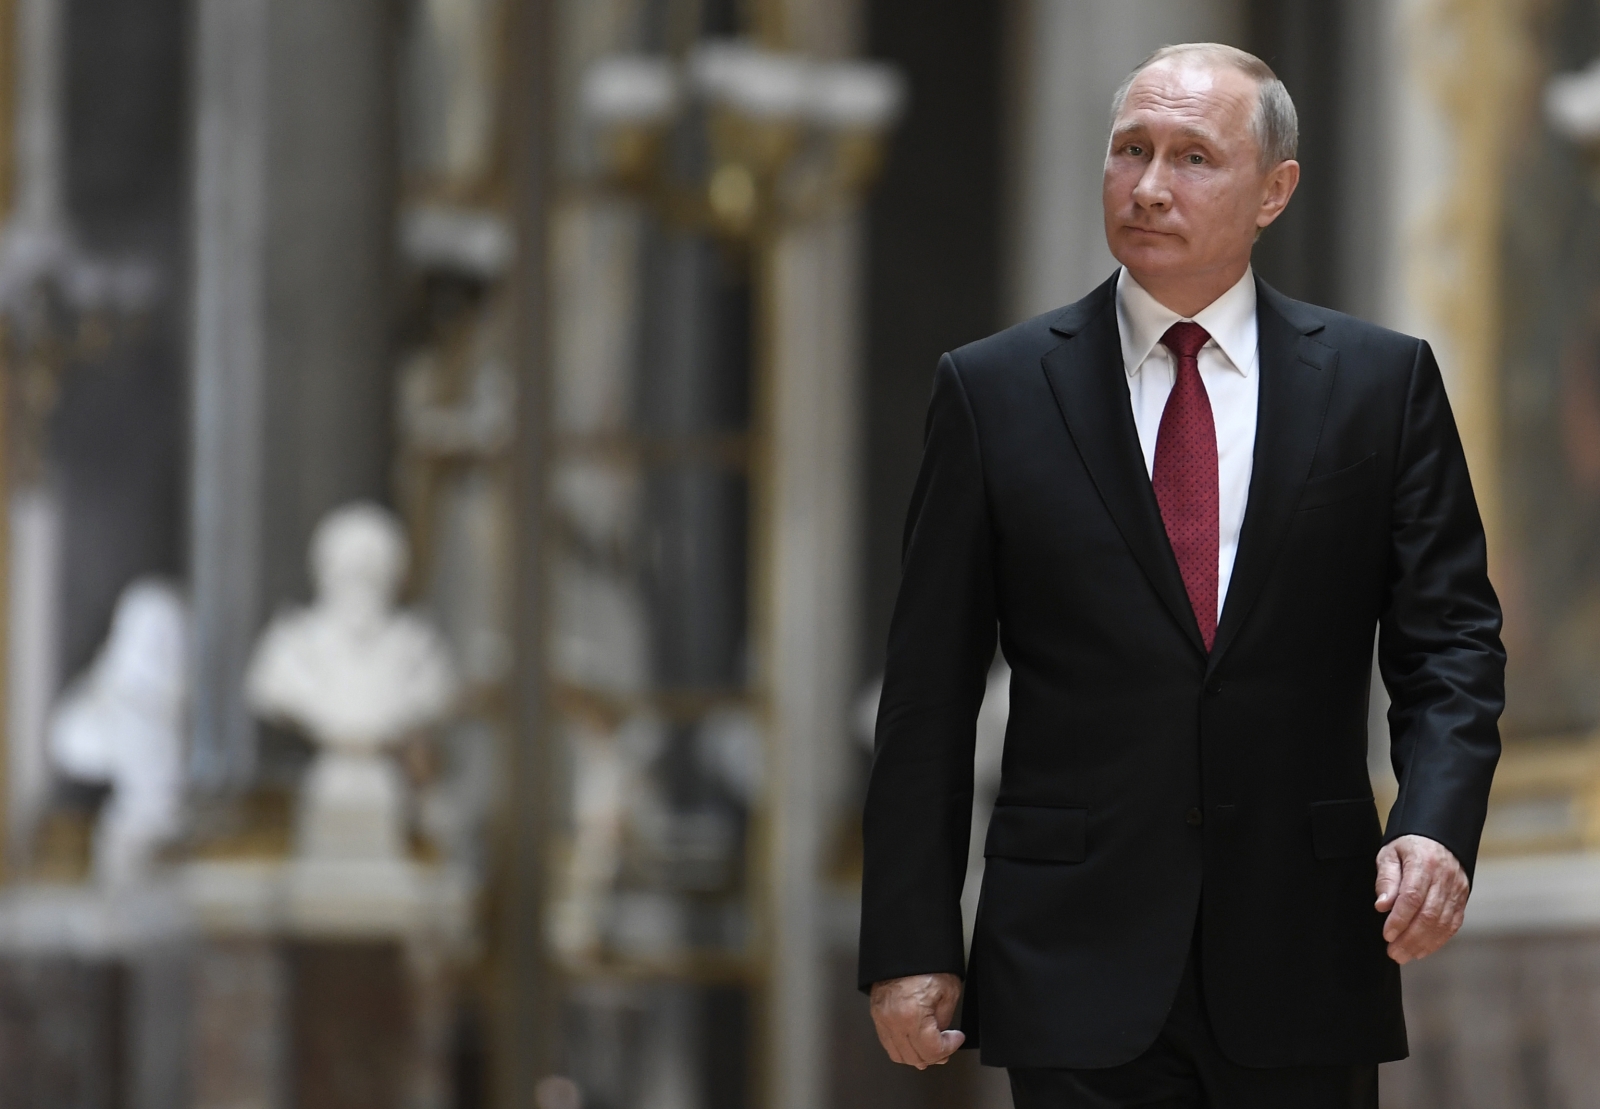 Putin denies knowledge of Jared Kushner's back channel proposal